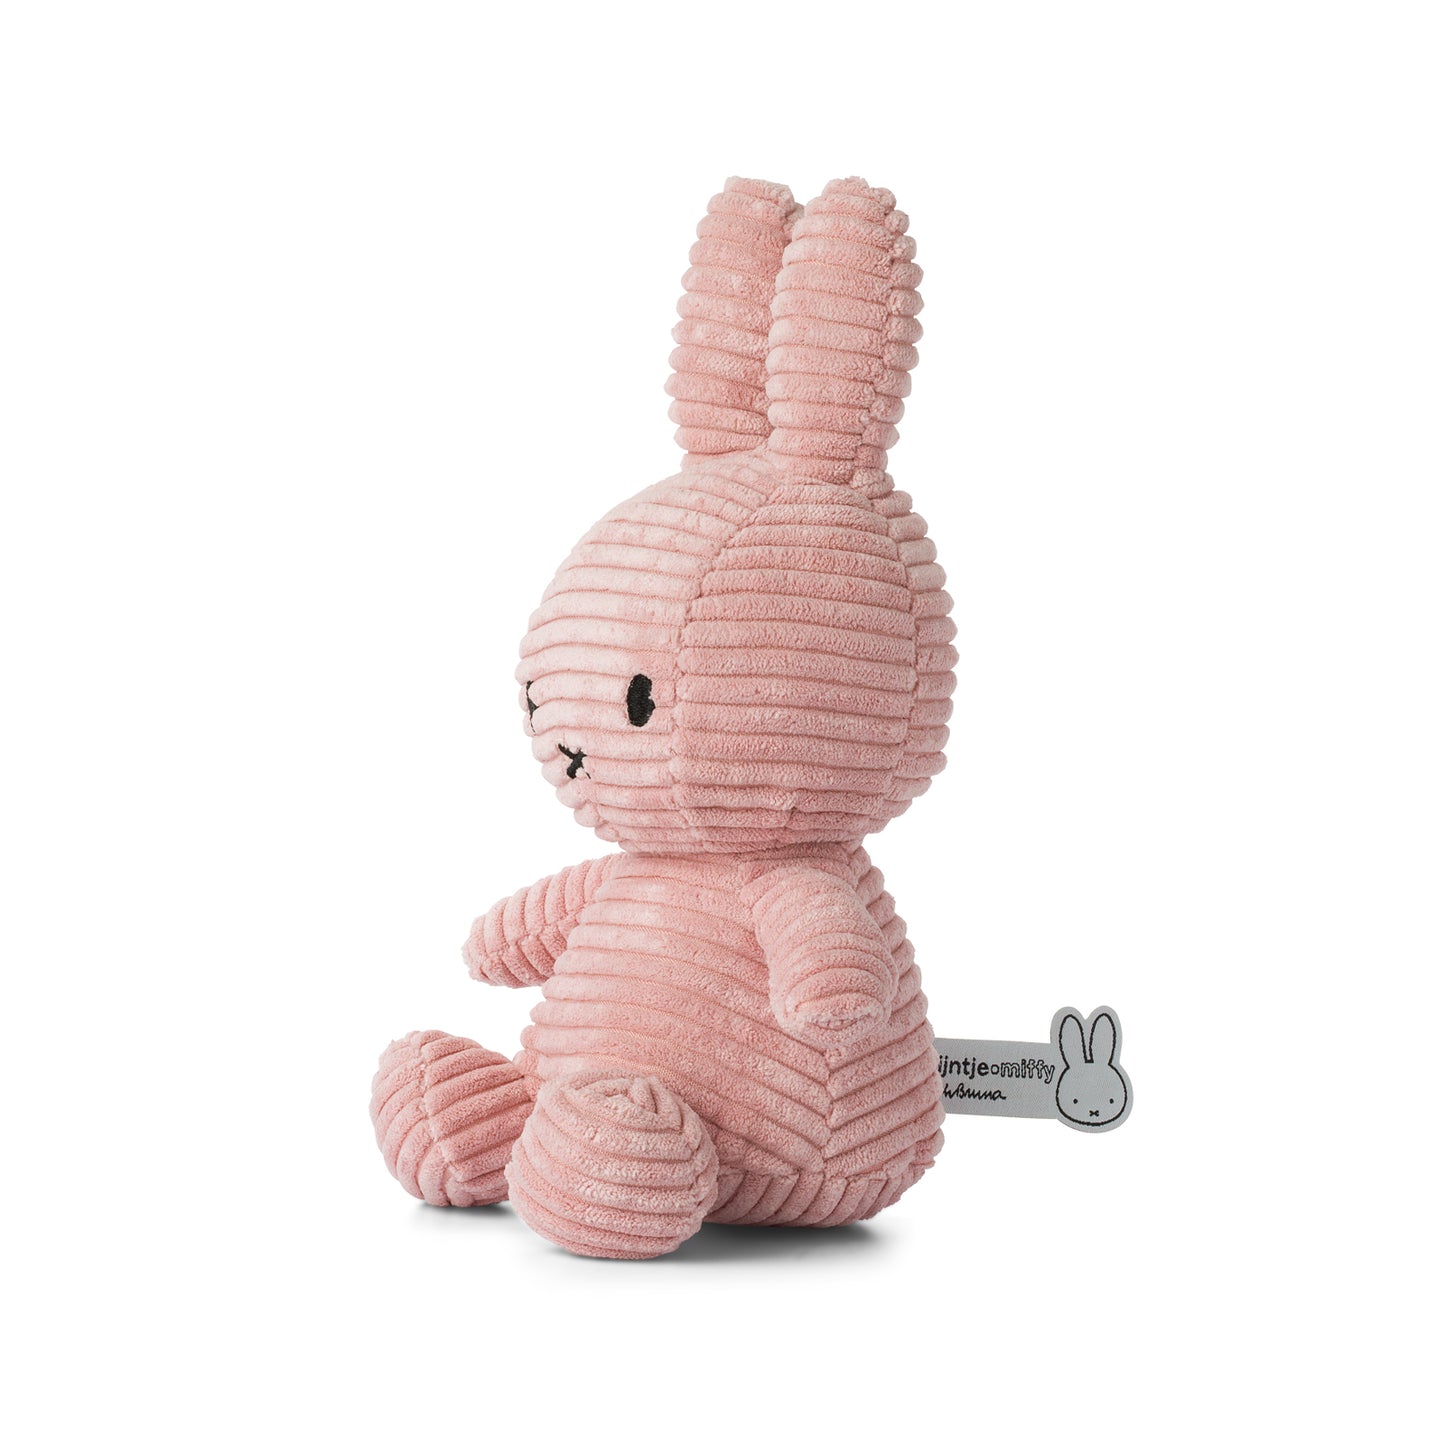 Miffy Sitting Corduroy Pink - 23cm - 9"